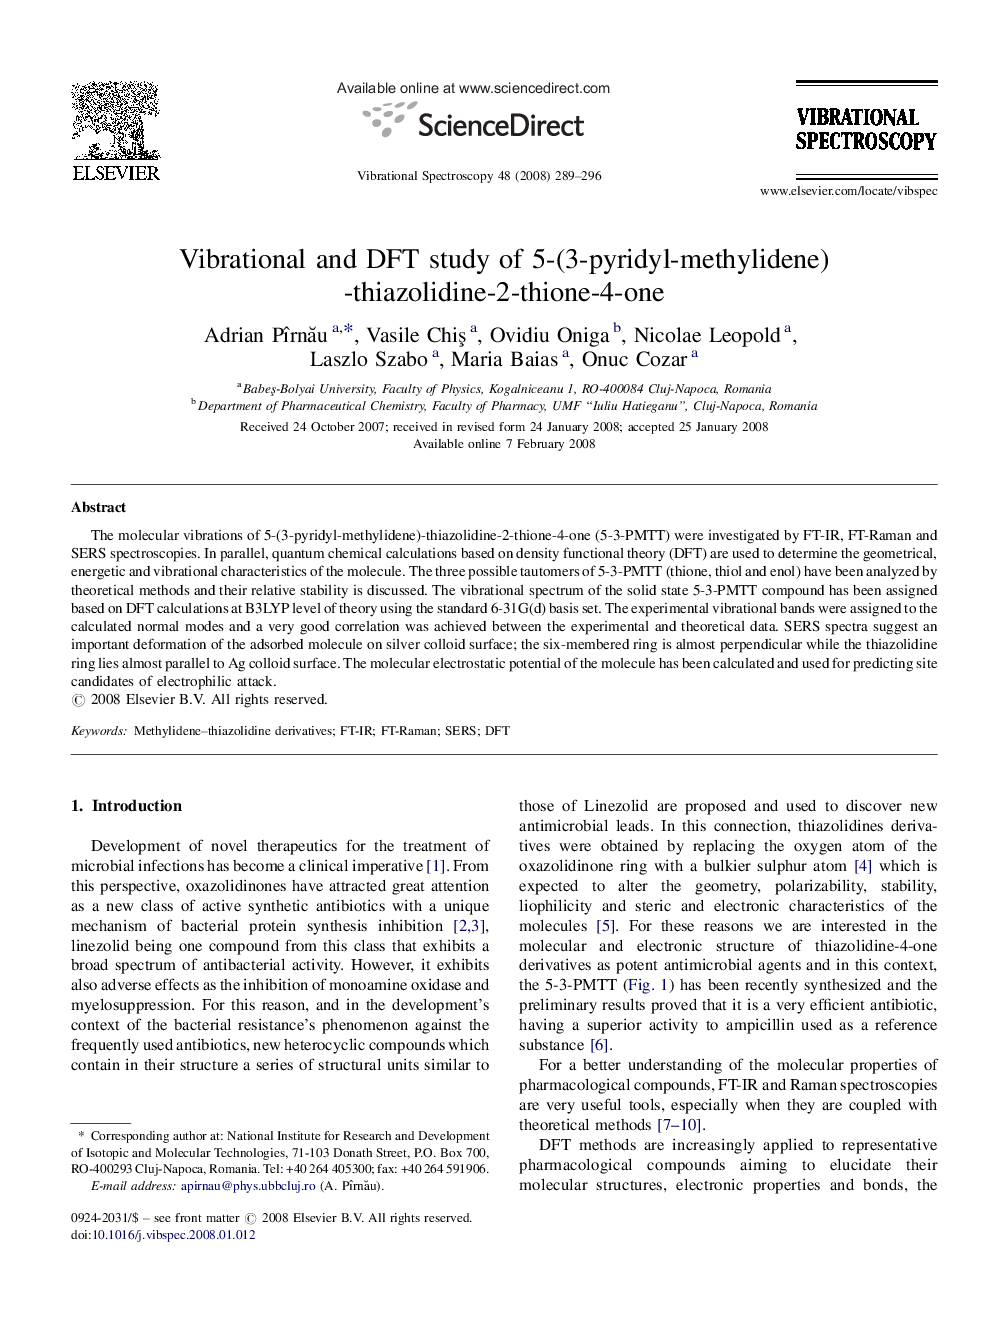 Vibrational and DFT study of 5-(3-pyridyl-methylidene)-thiazolidine-2-thione-4-one